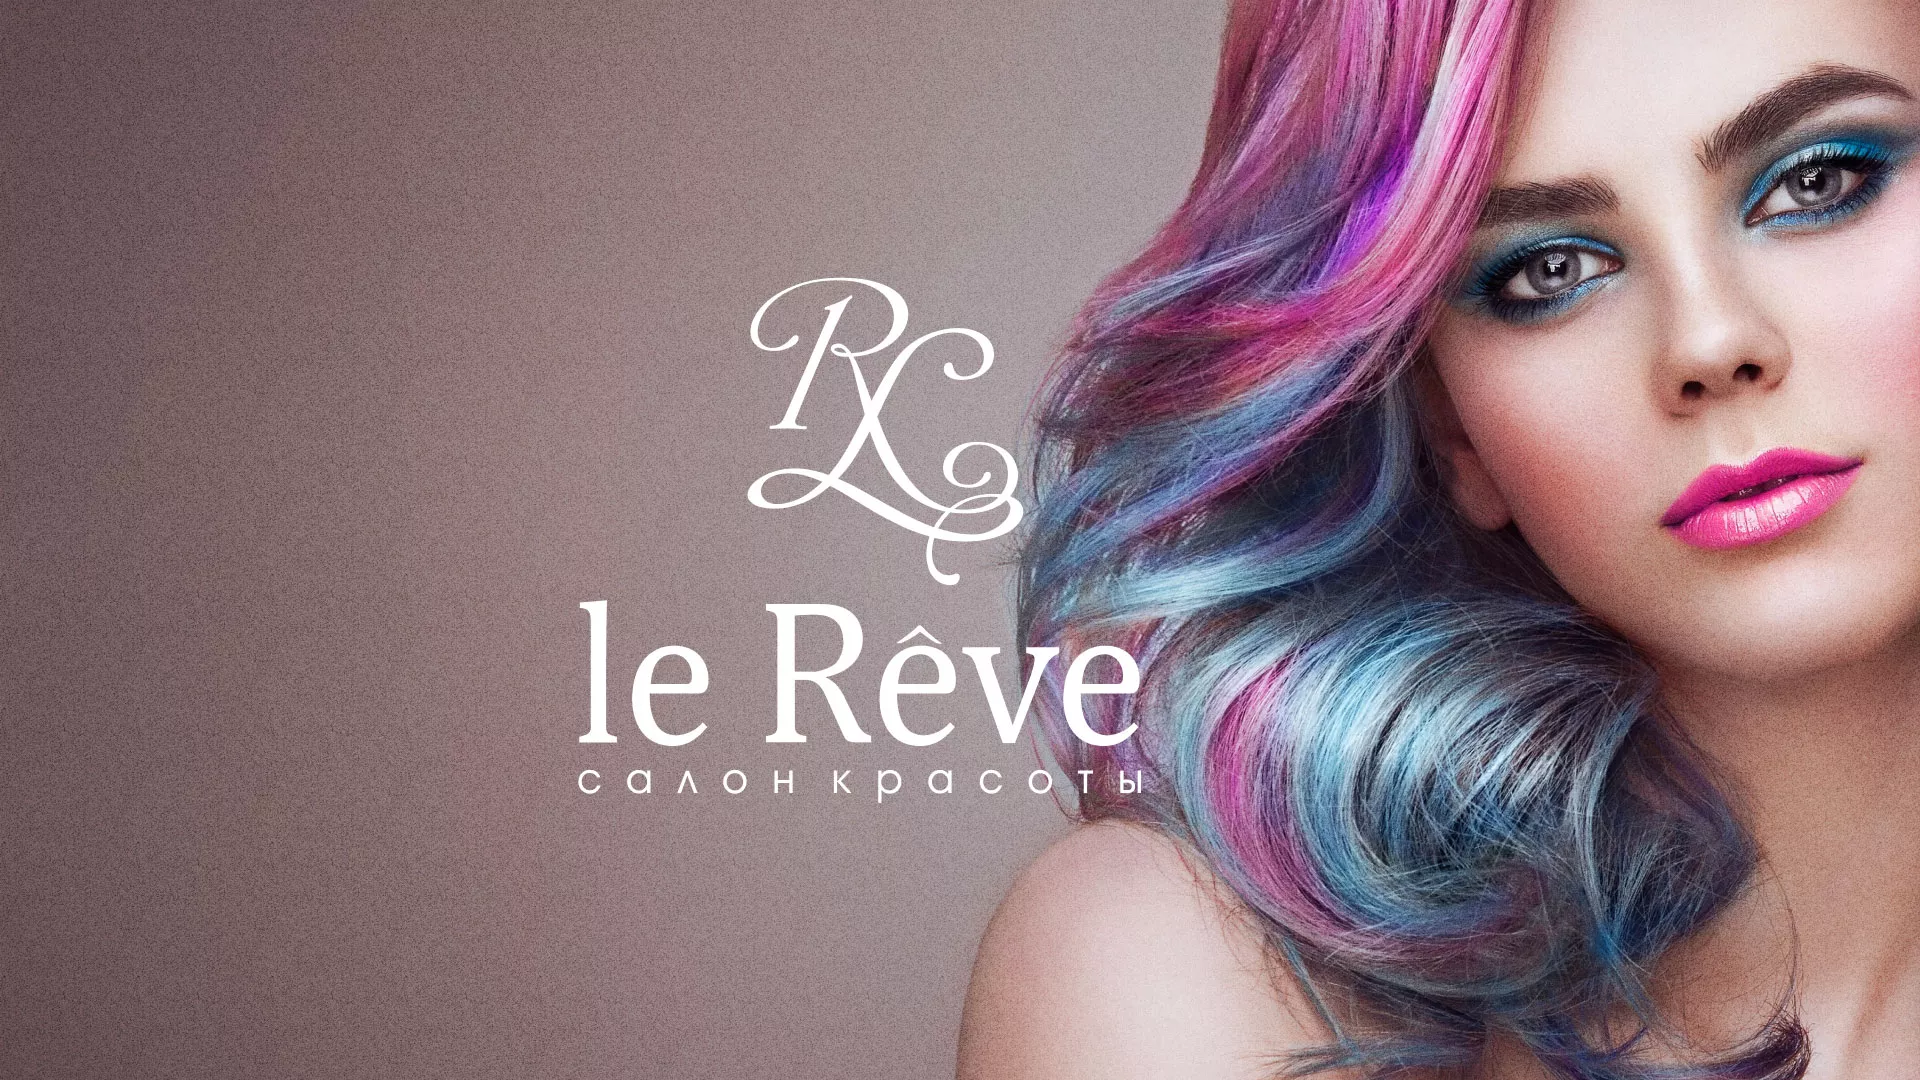 Создание сайта для салона красоты «Le Reve» в Злынке